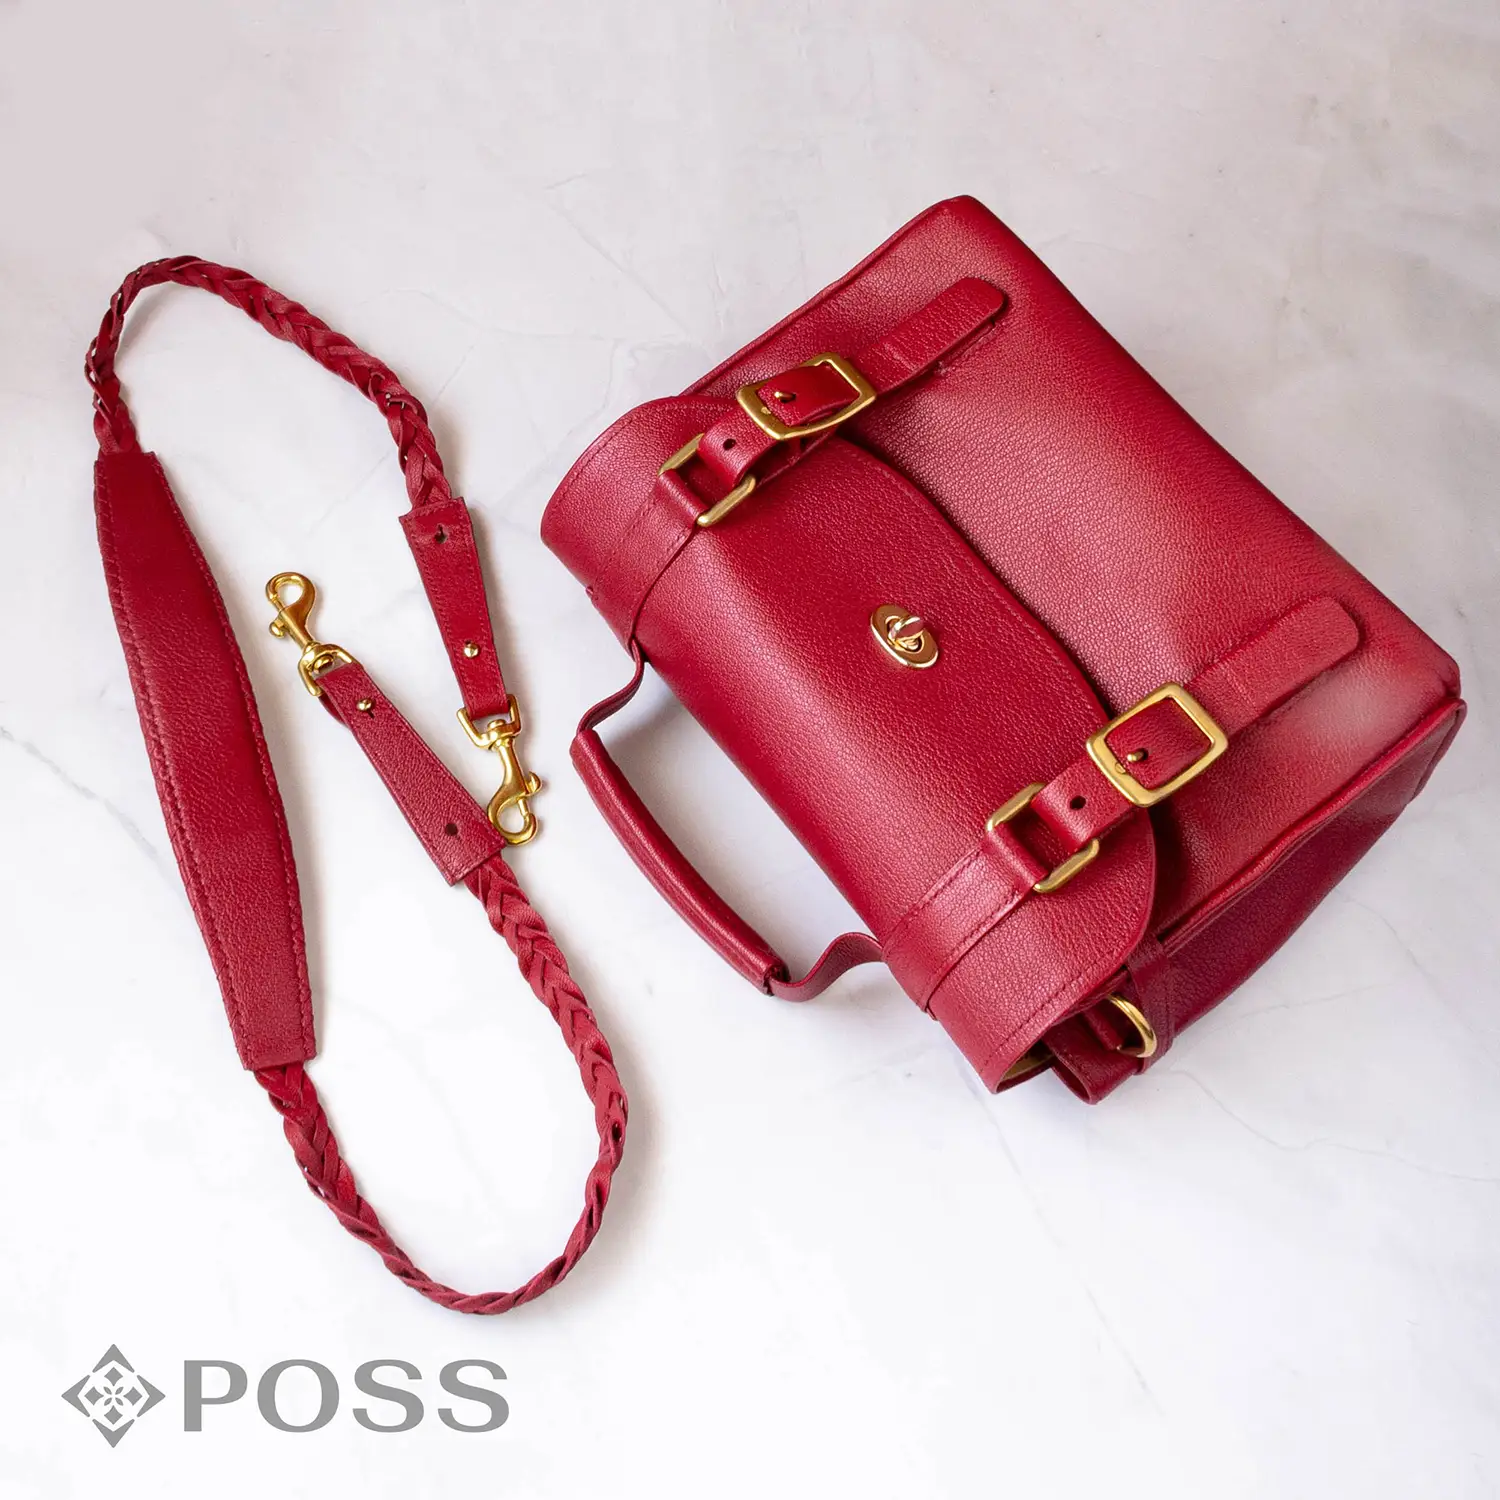 red leather english satchel handbag